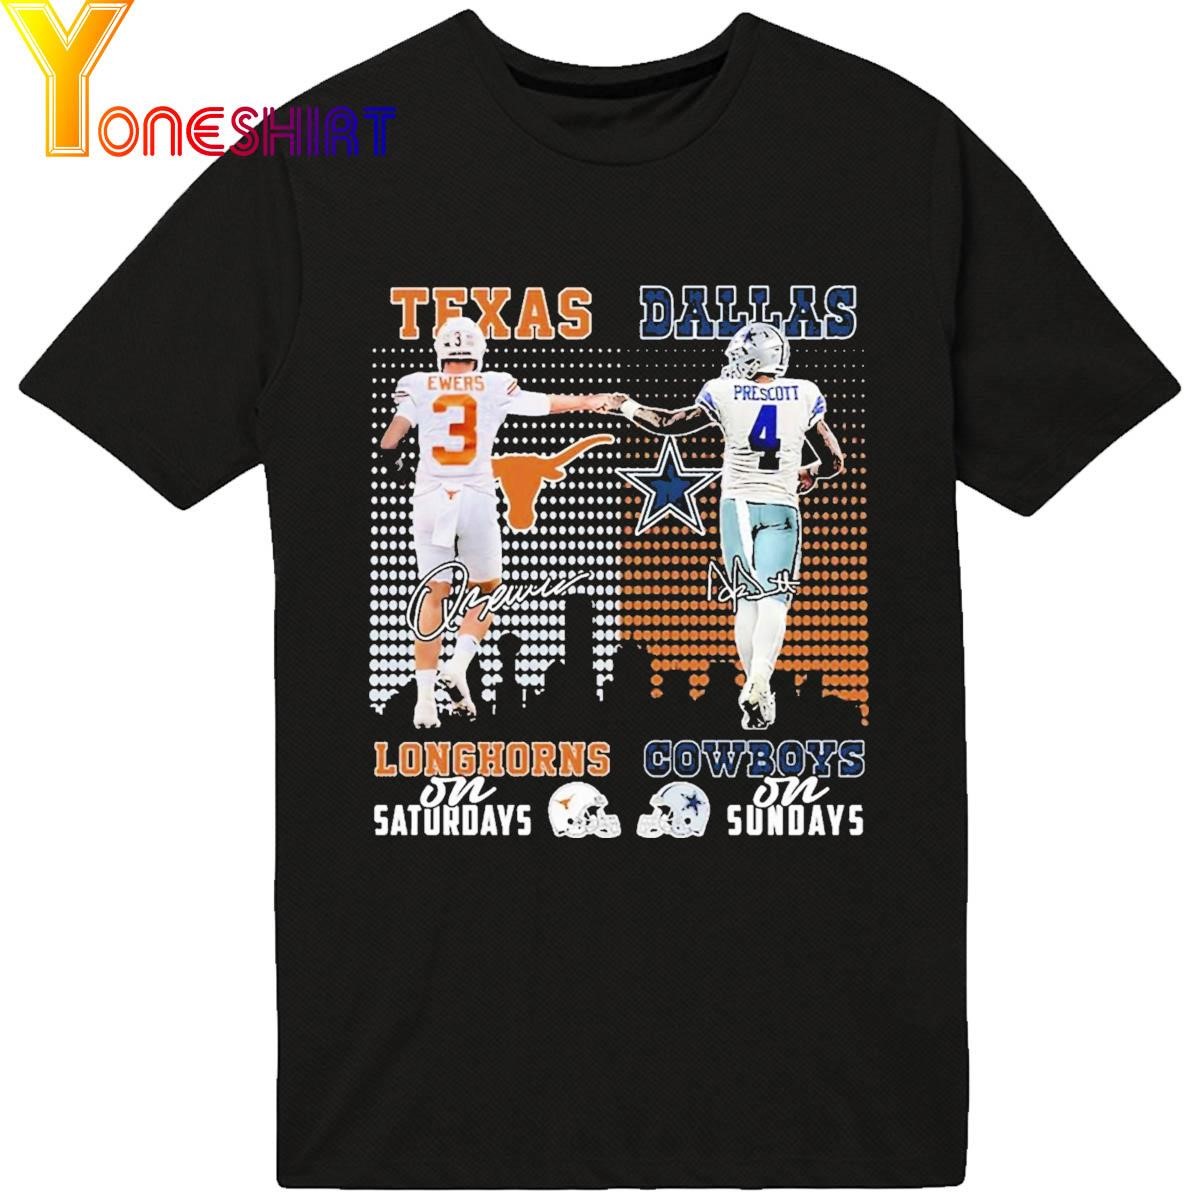 Texas Longhorns On Saturdays And Dallas Cowboys On Sundays Shirt